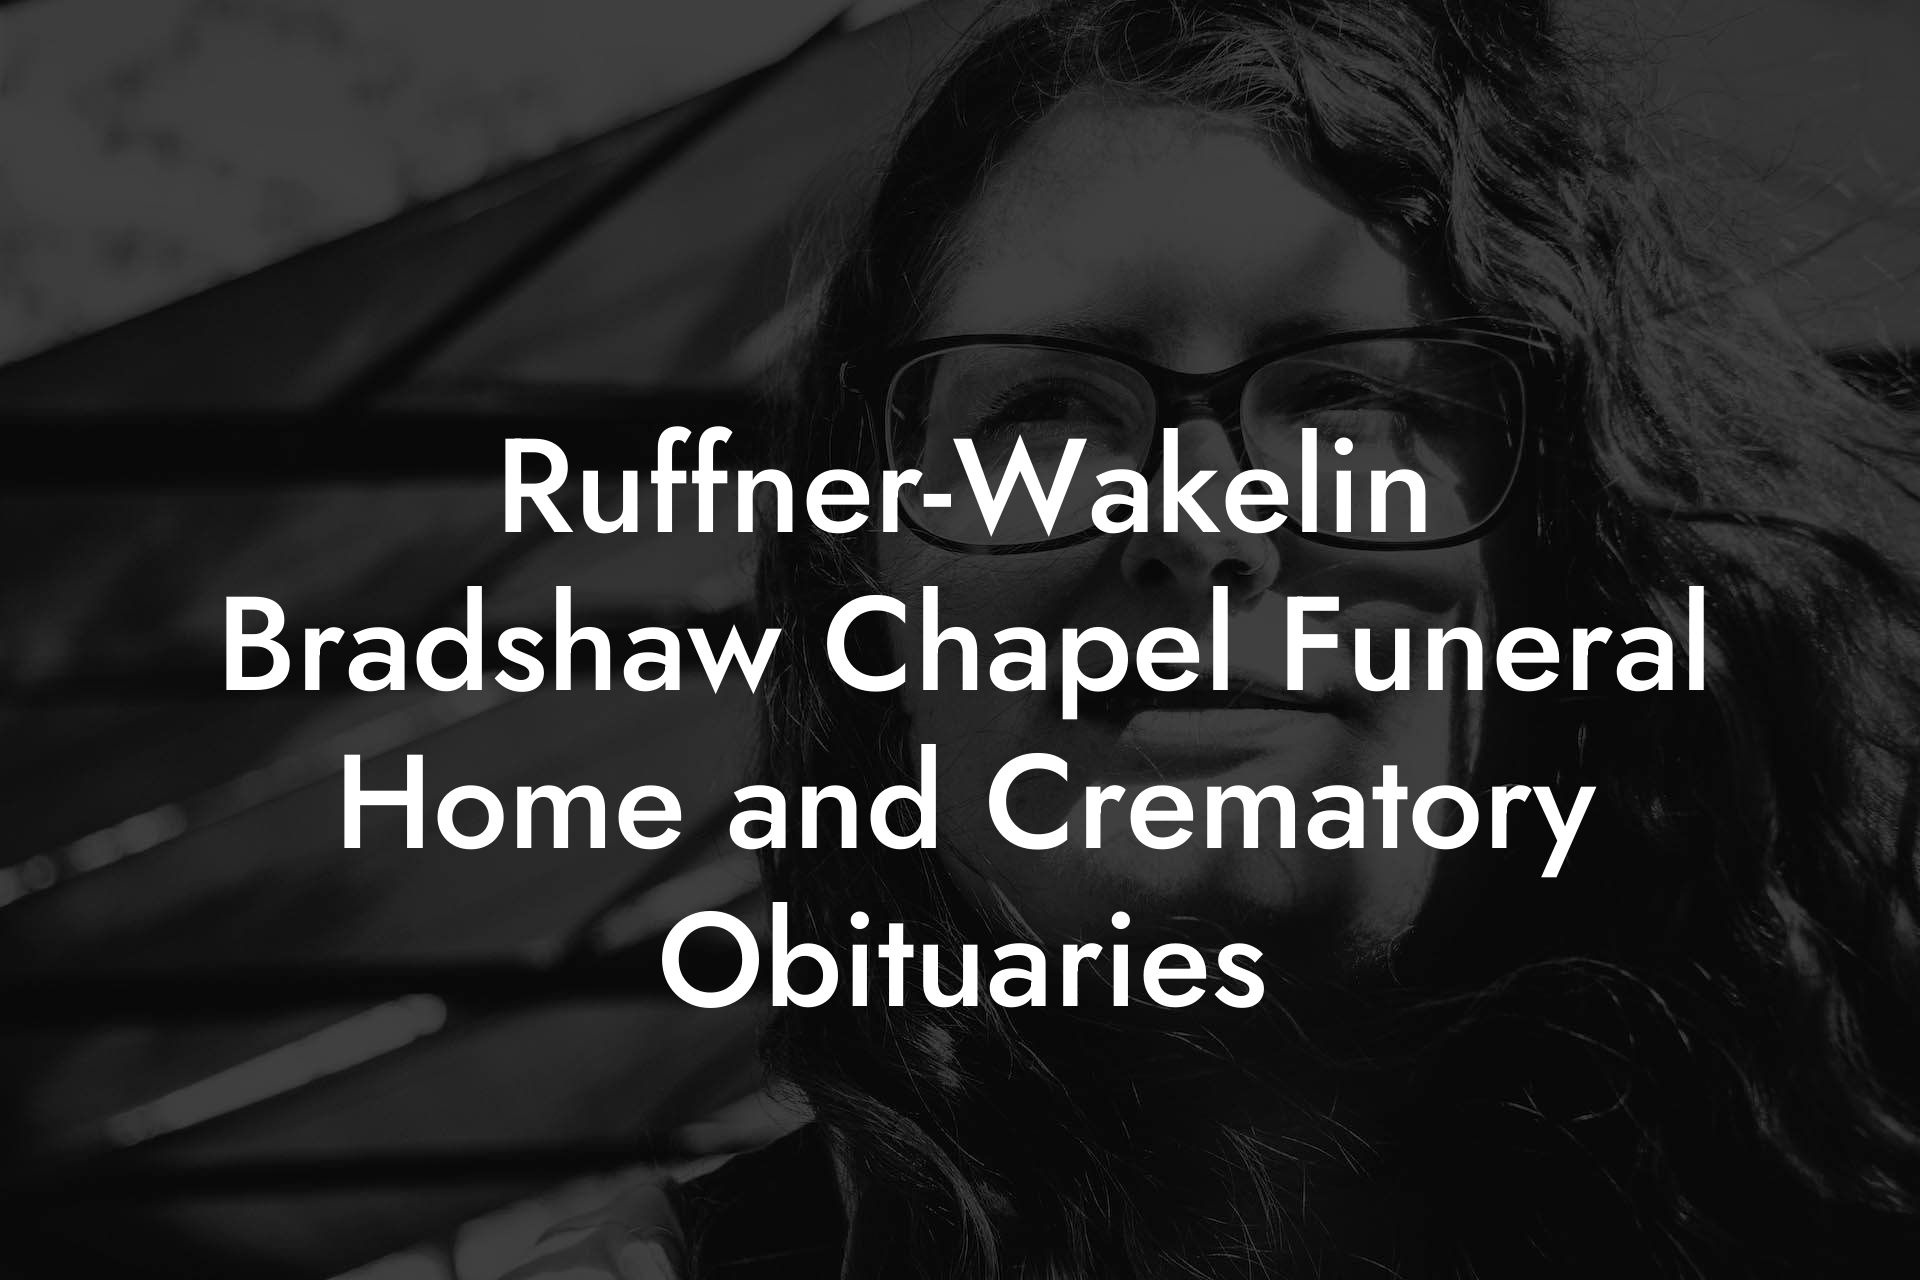 Ruffner-Wakelin Bradshaw Chapel Funeral Home and Crematory Obituaries